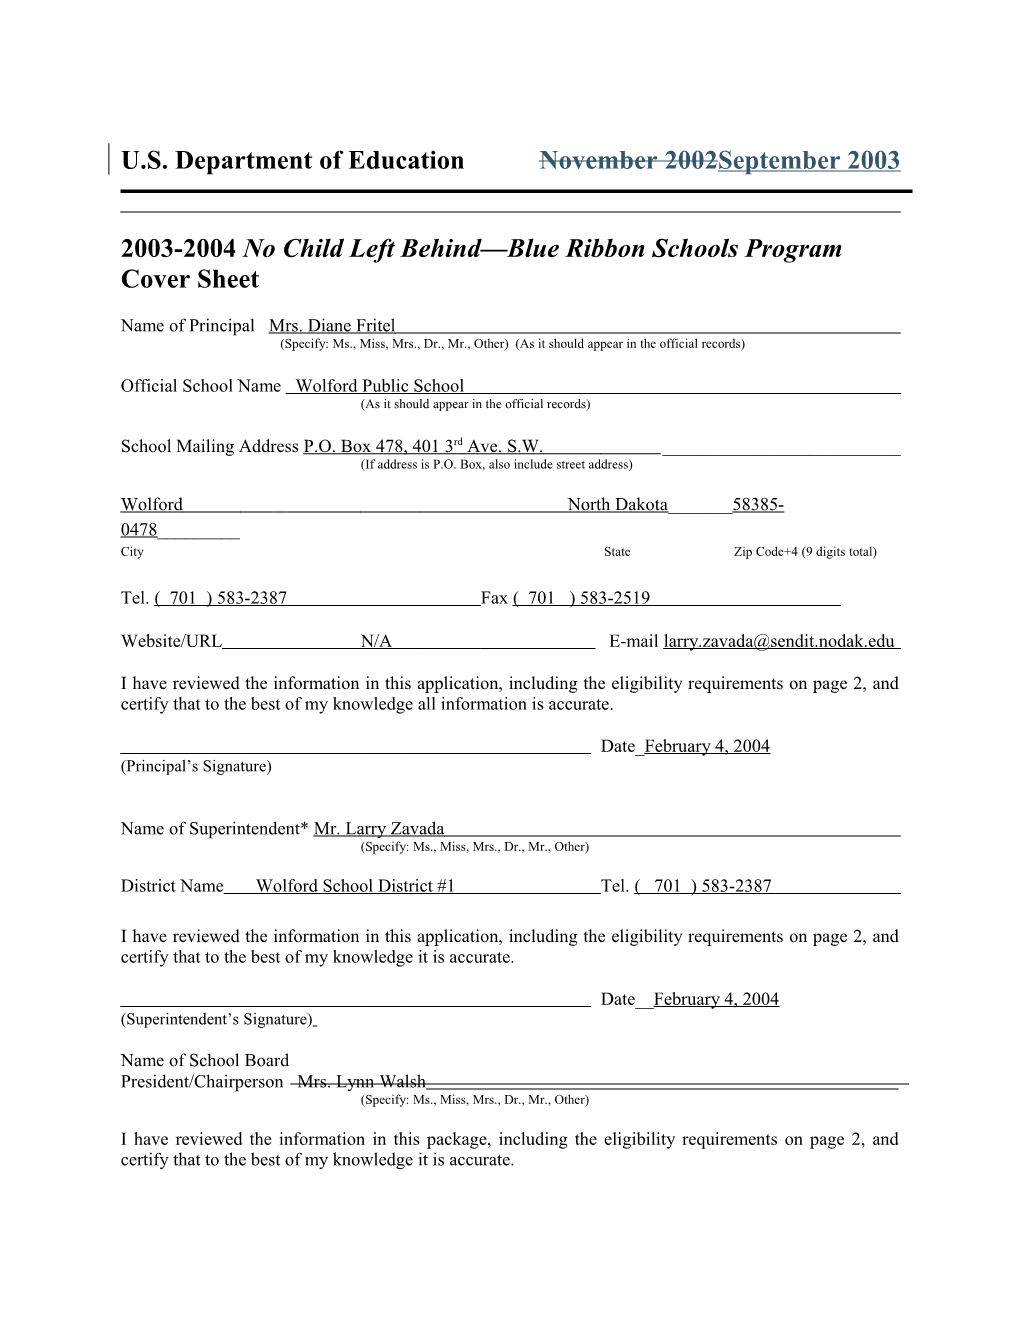 Wolford Public School 2004 No Child Left Behind-Blue Ribbon School Application (Msword)